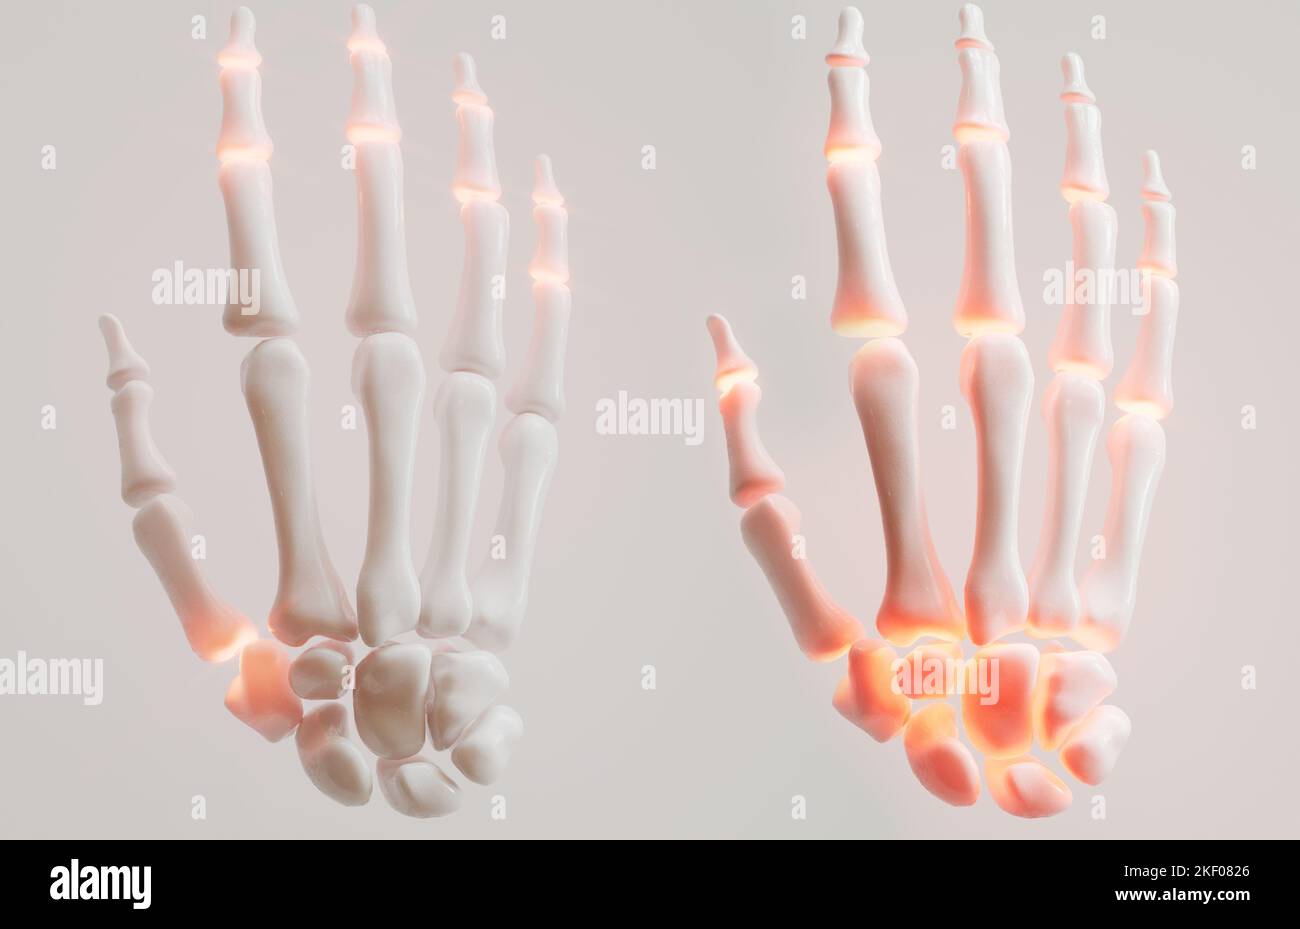 Rheumatoid arthritis and finger polyarthrosis in comparison - 3D rendering Stock Photo